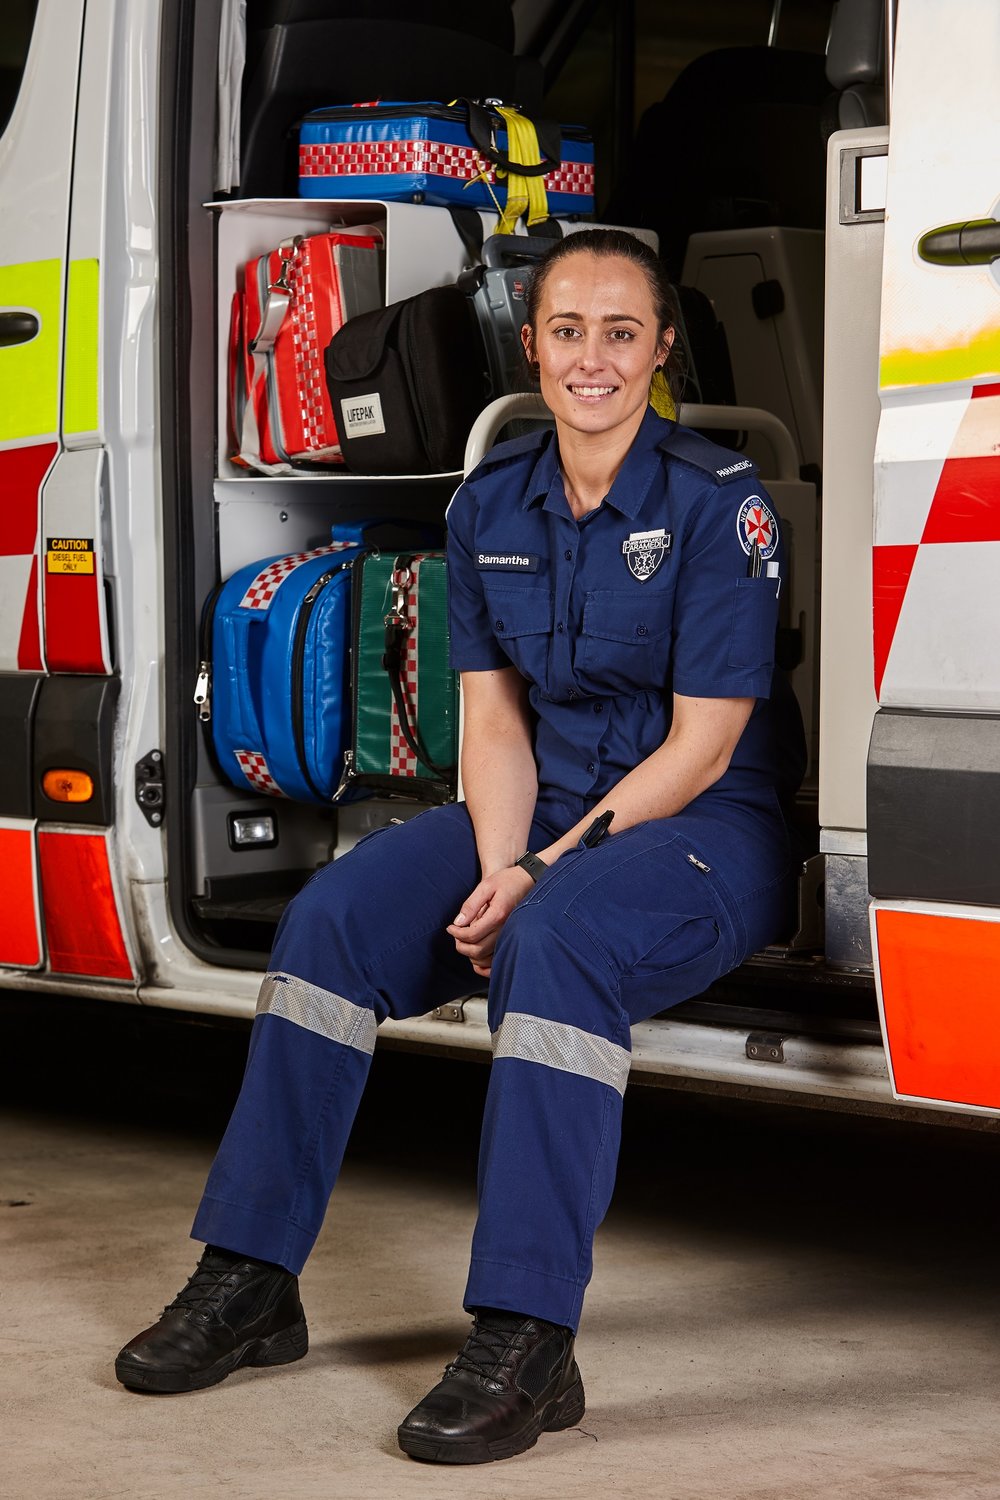  NSW Ambulance officer Sam Image - Ten 